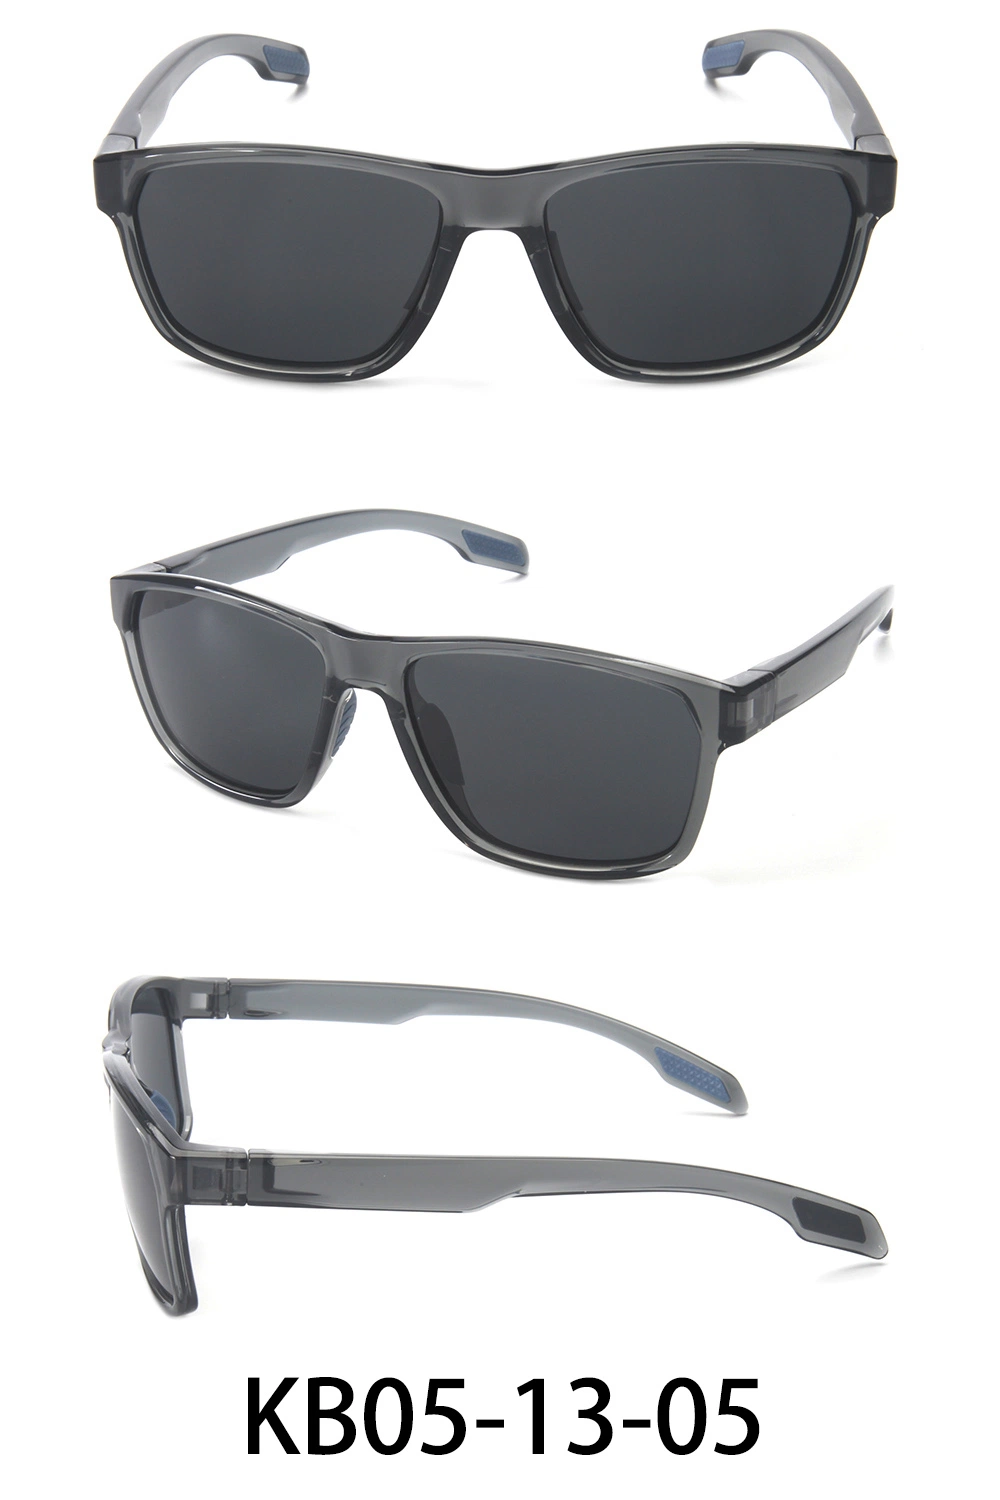 Men Vintage Square Sport Polarized Fishing Sunglasses New Fashion Retro Luxury High Quality Climbing Glasses